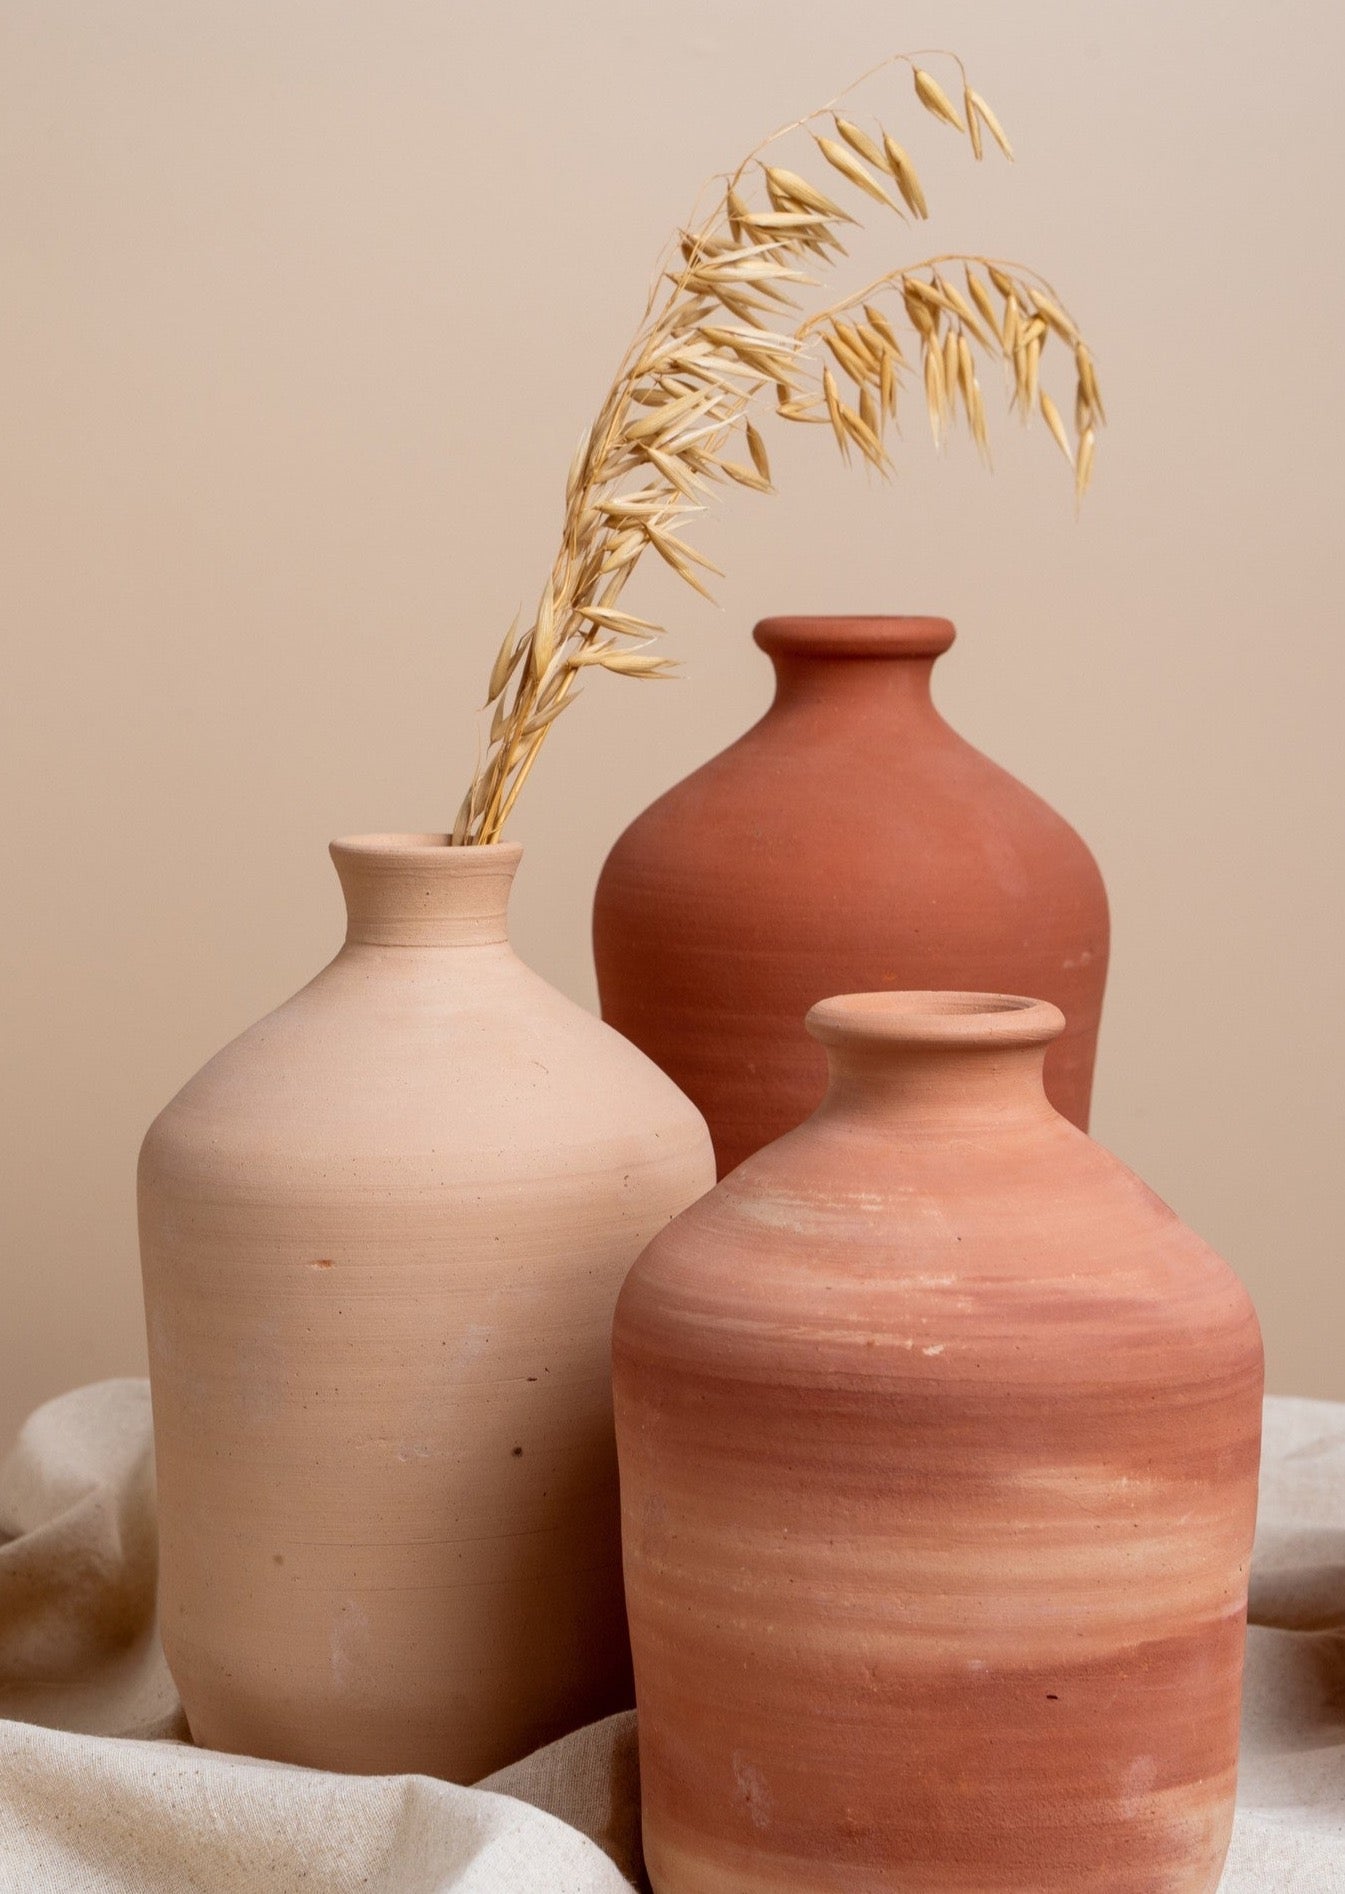 Amphora Vase - Crio